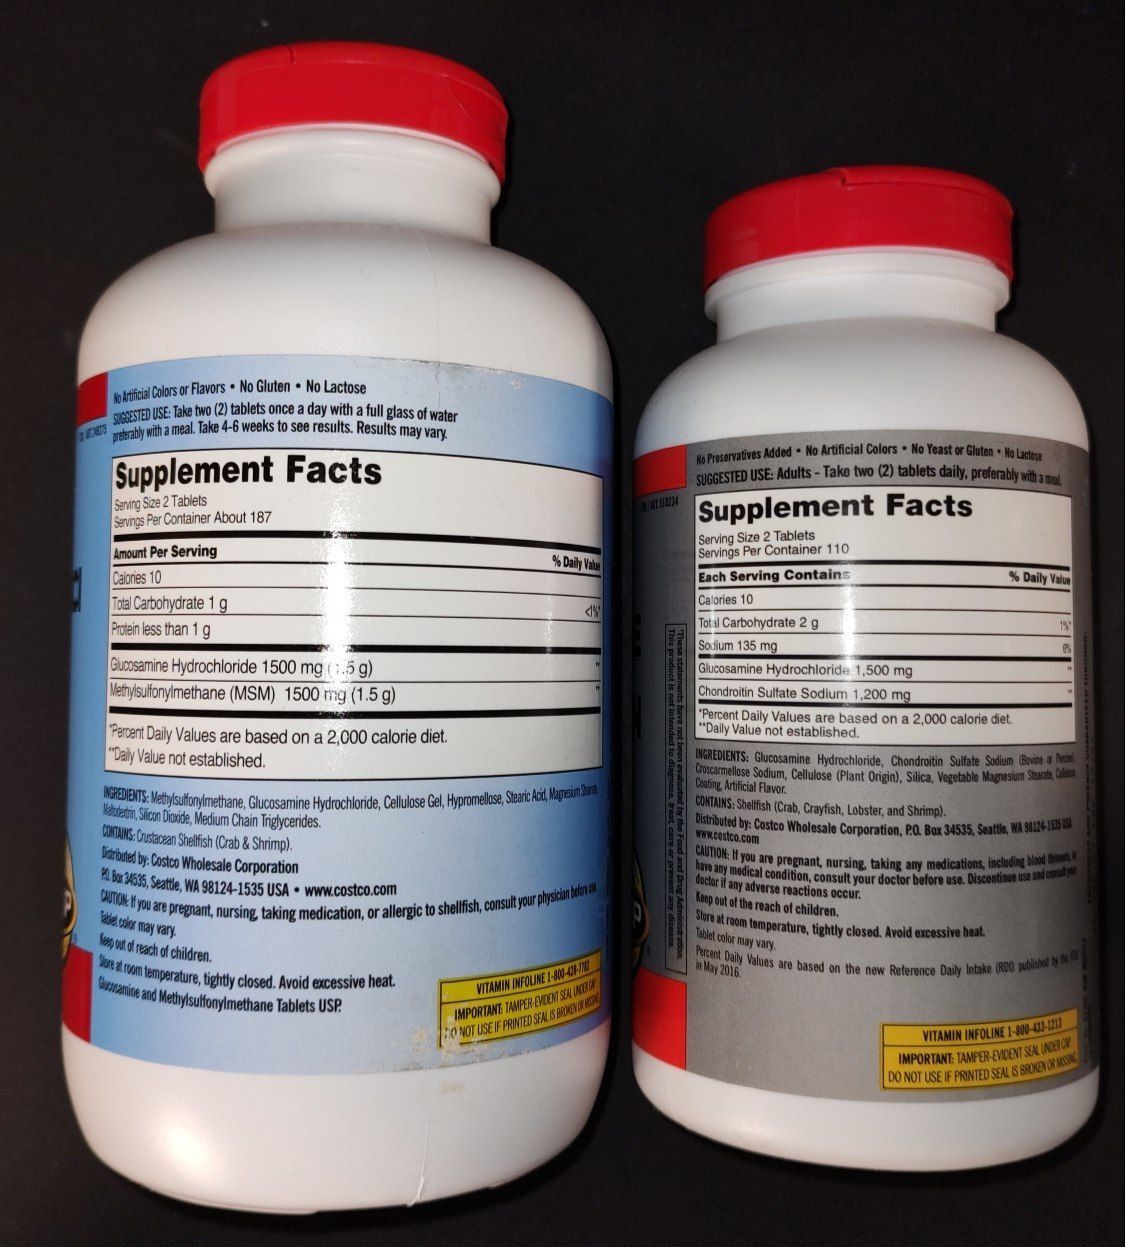 Глюкозамин+МСМ, Хондроитин. Kirkland(США). Glucosamine. БАД.витамин